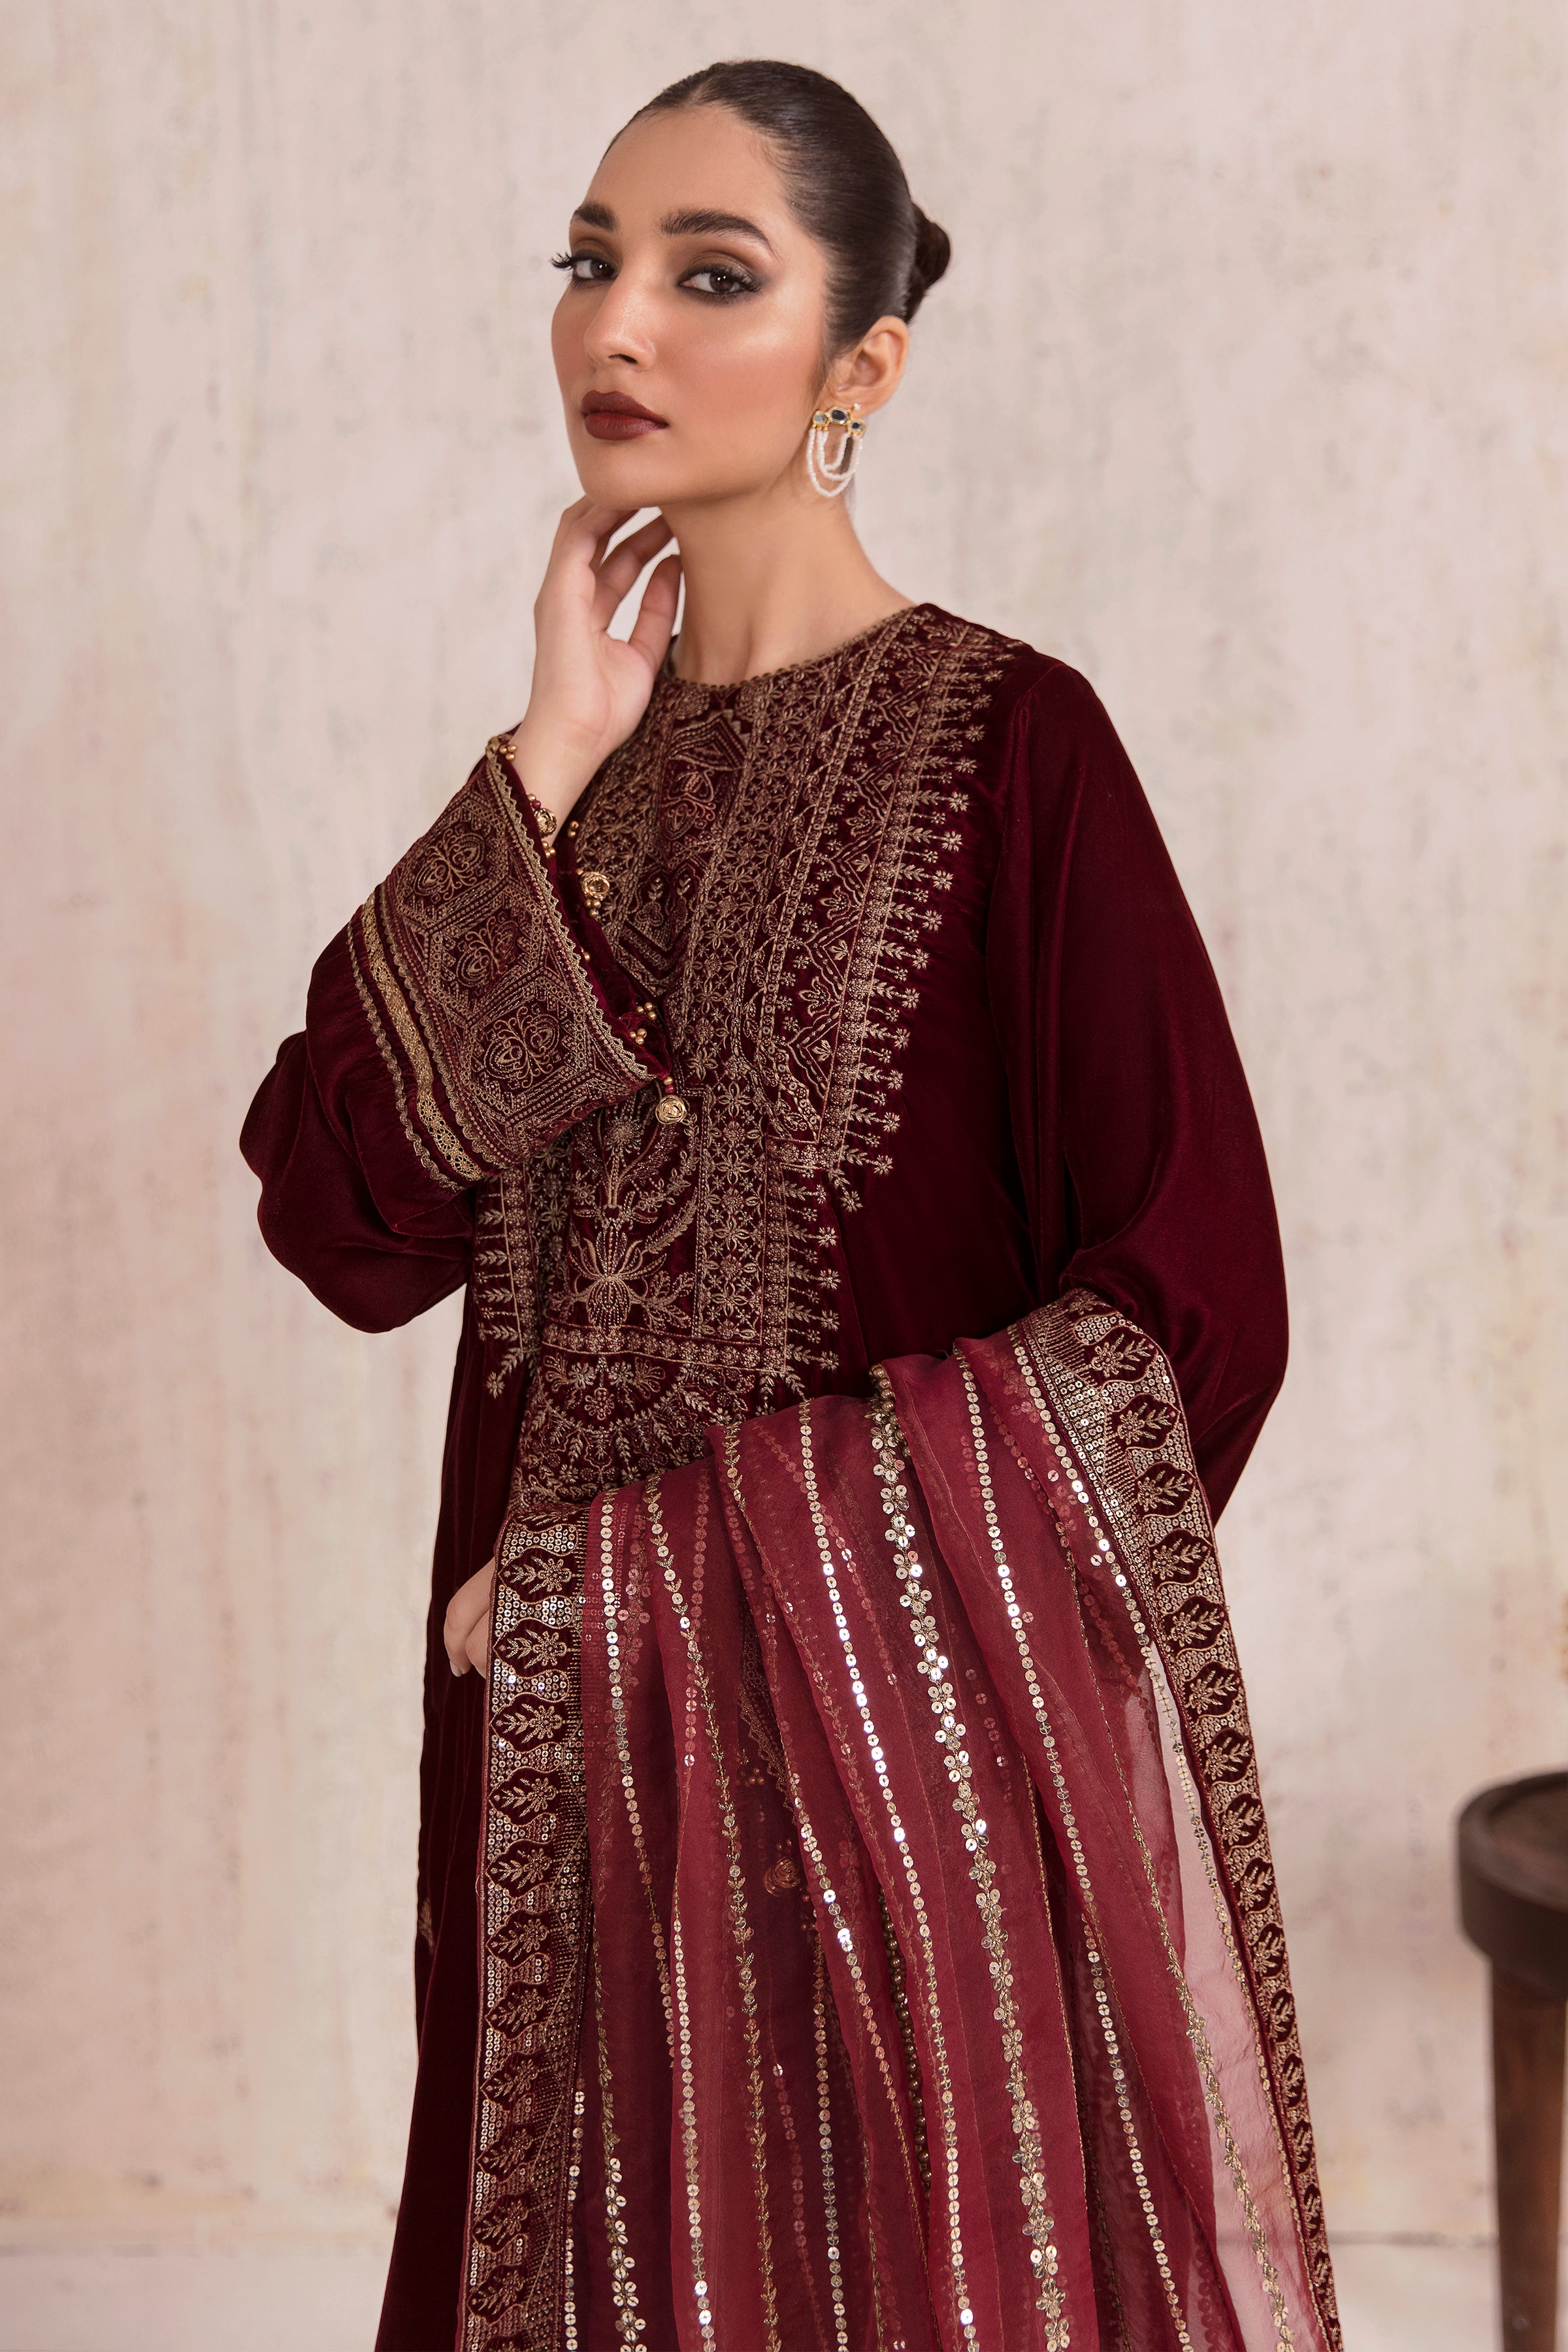 Velvet Dress Pakistani 2018 Discount - www.cryslercommunitycenter.com  1694552015